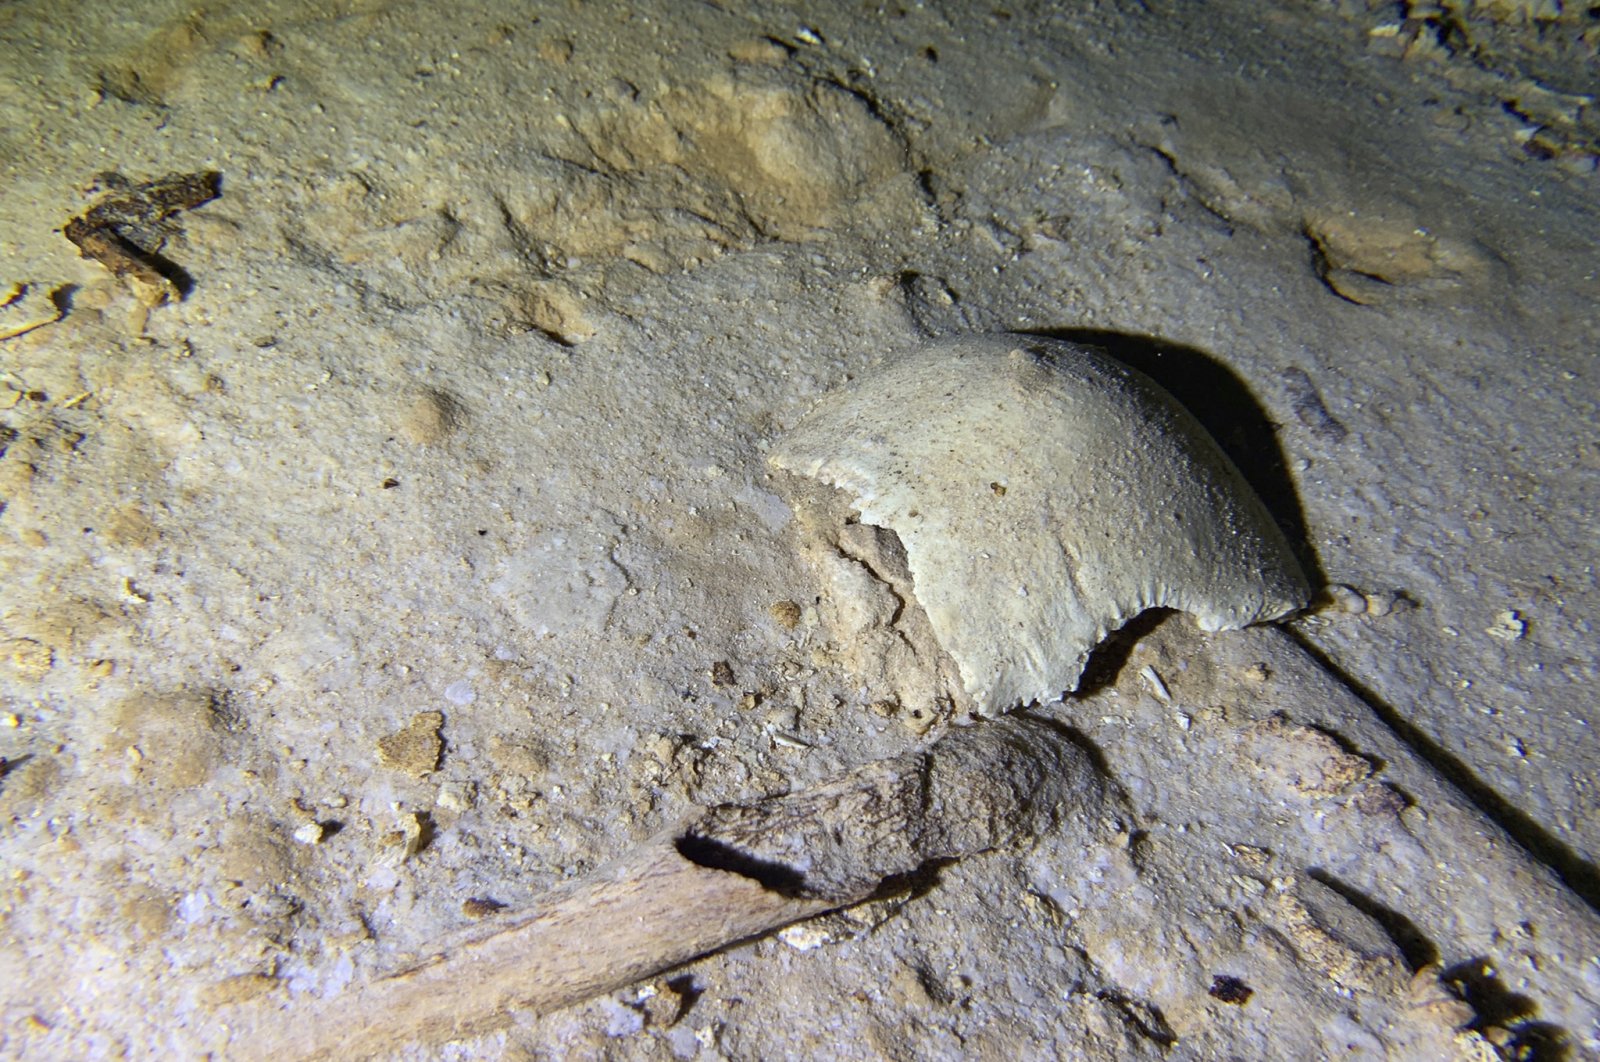 Kerangka kuno ditemukan di gua Meksiko terancam oleh kereta api